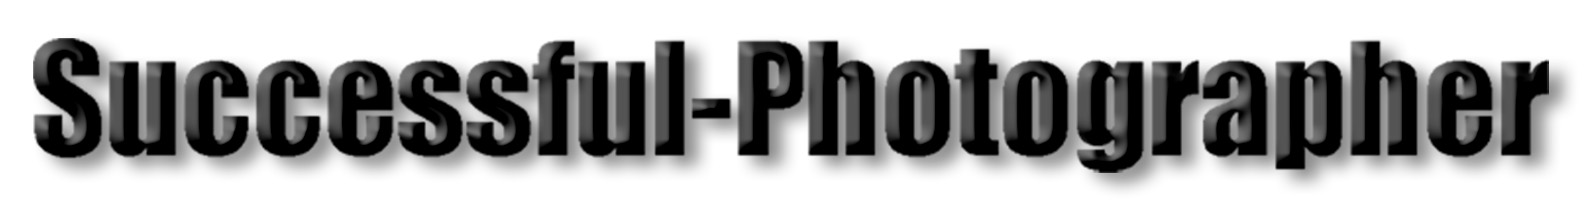 successful-photographer logo